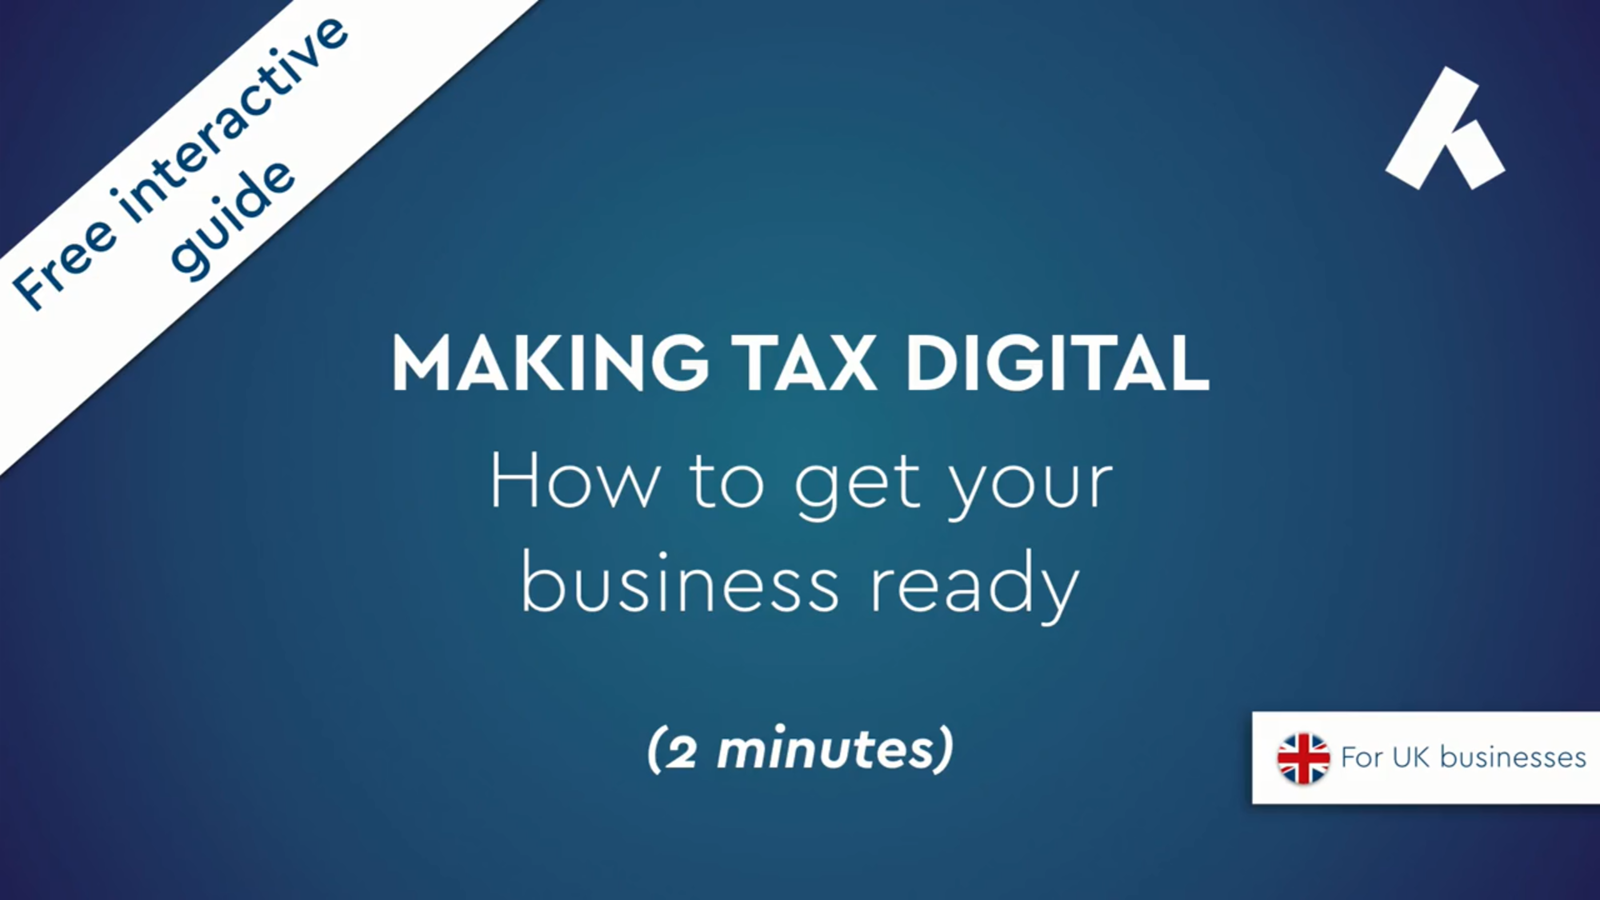 INNOVATION: Making Tax Digital tool